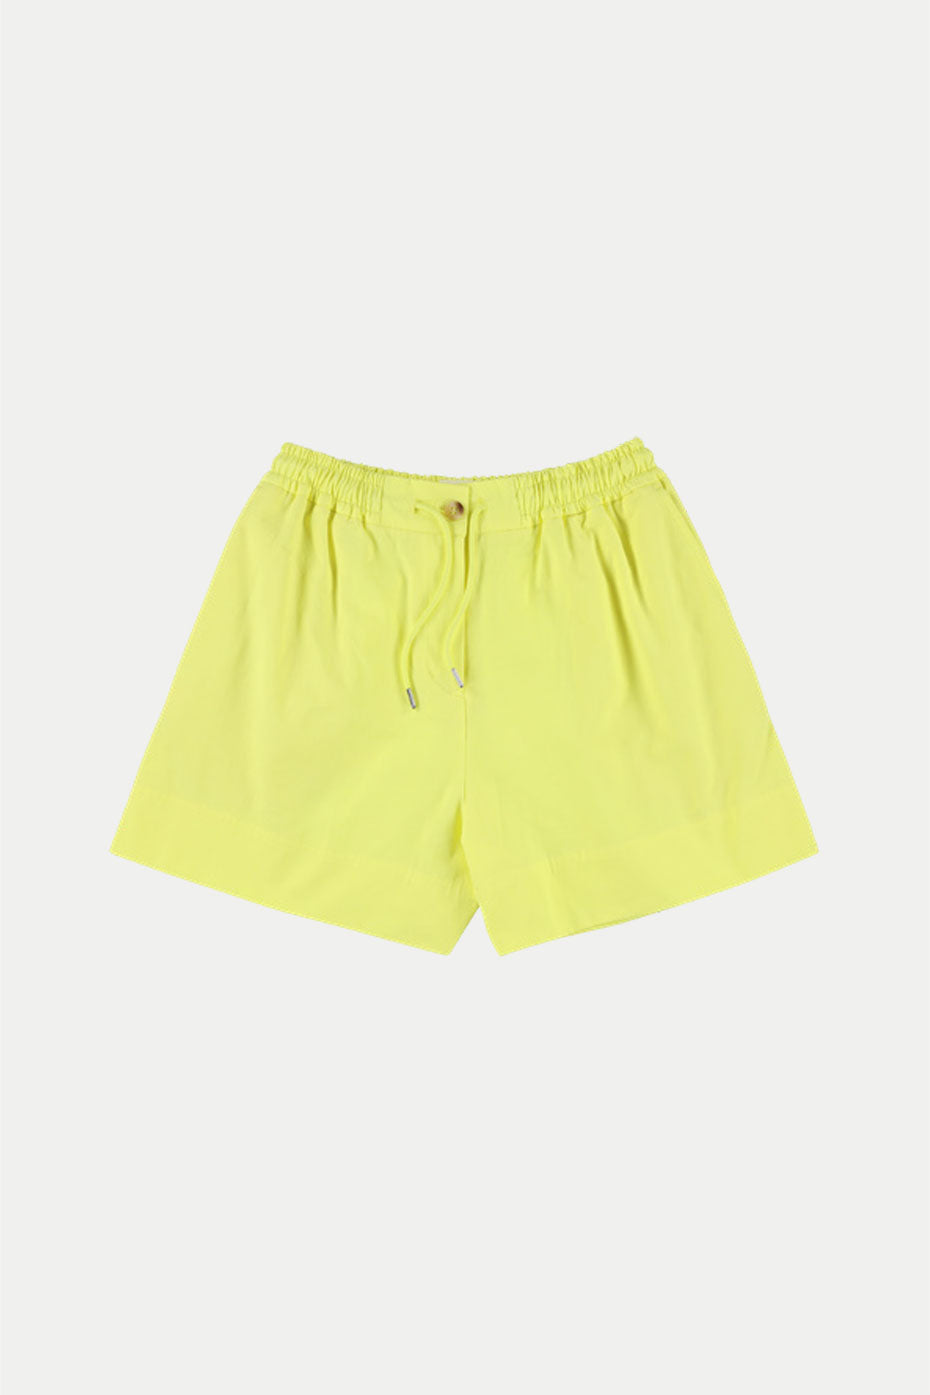 Lime Dolboy Shorts